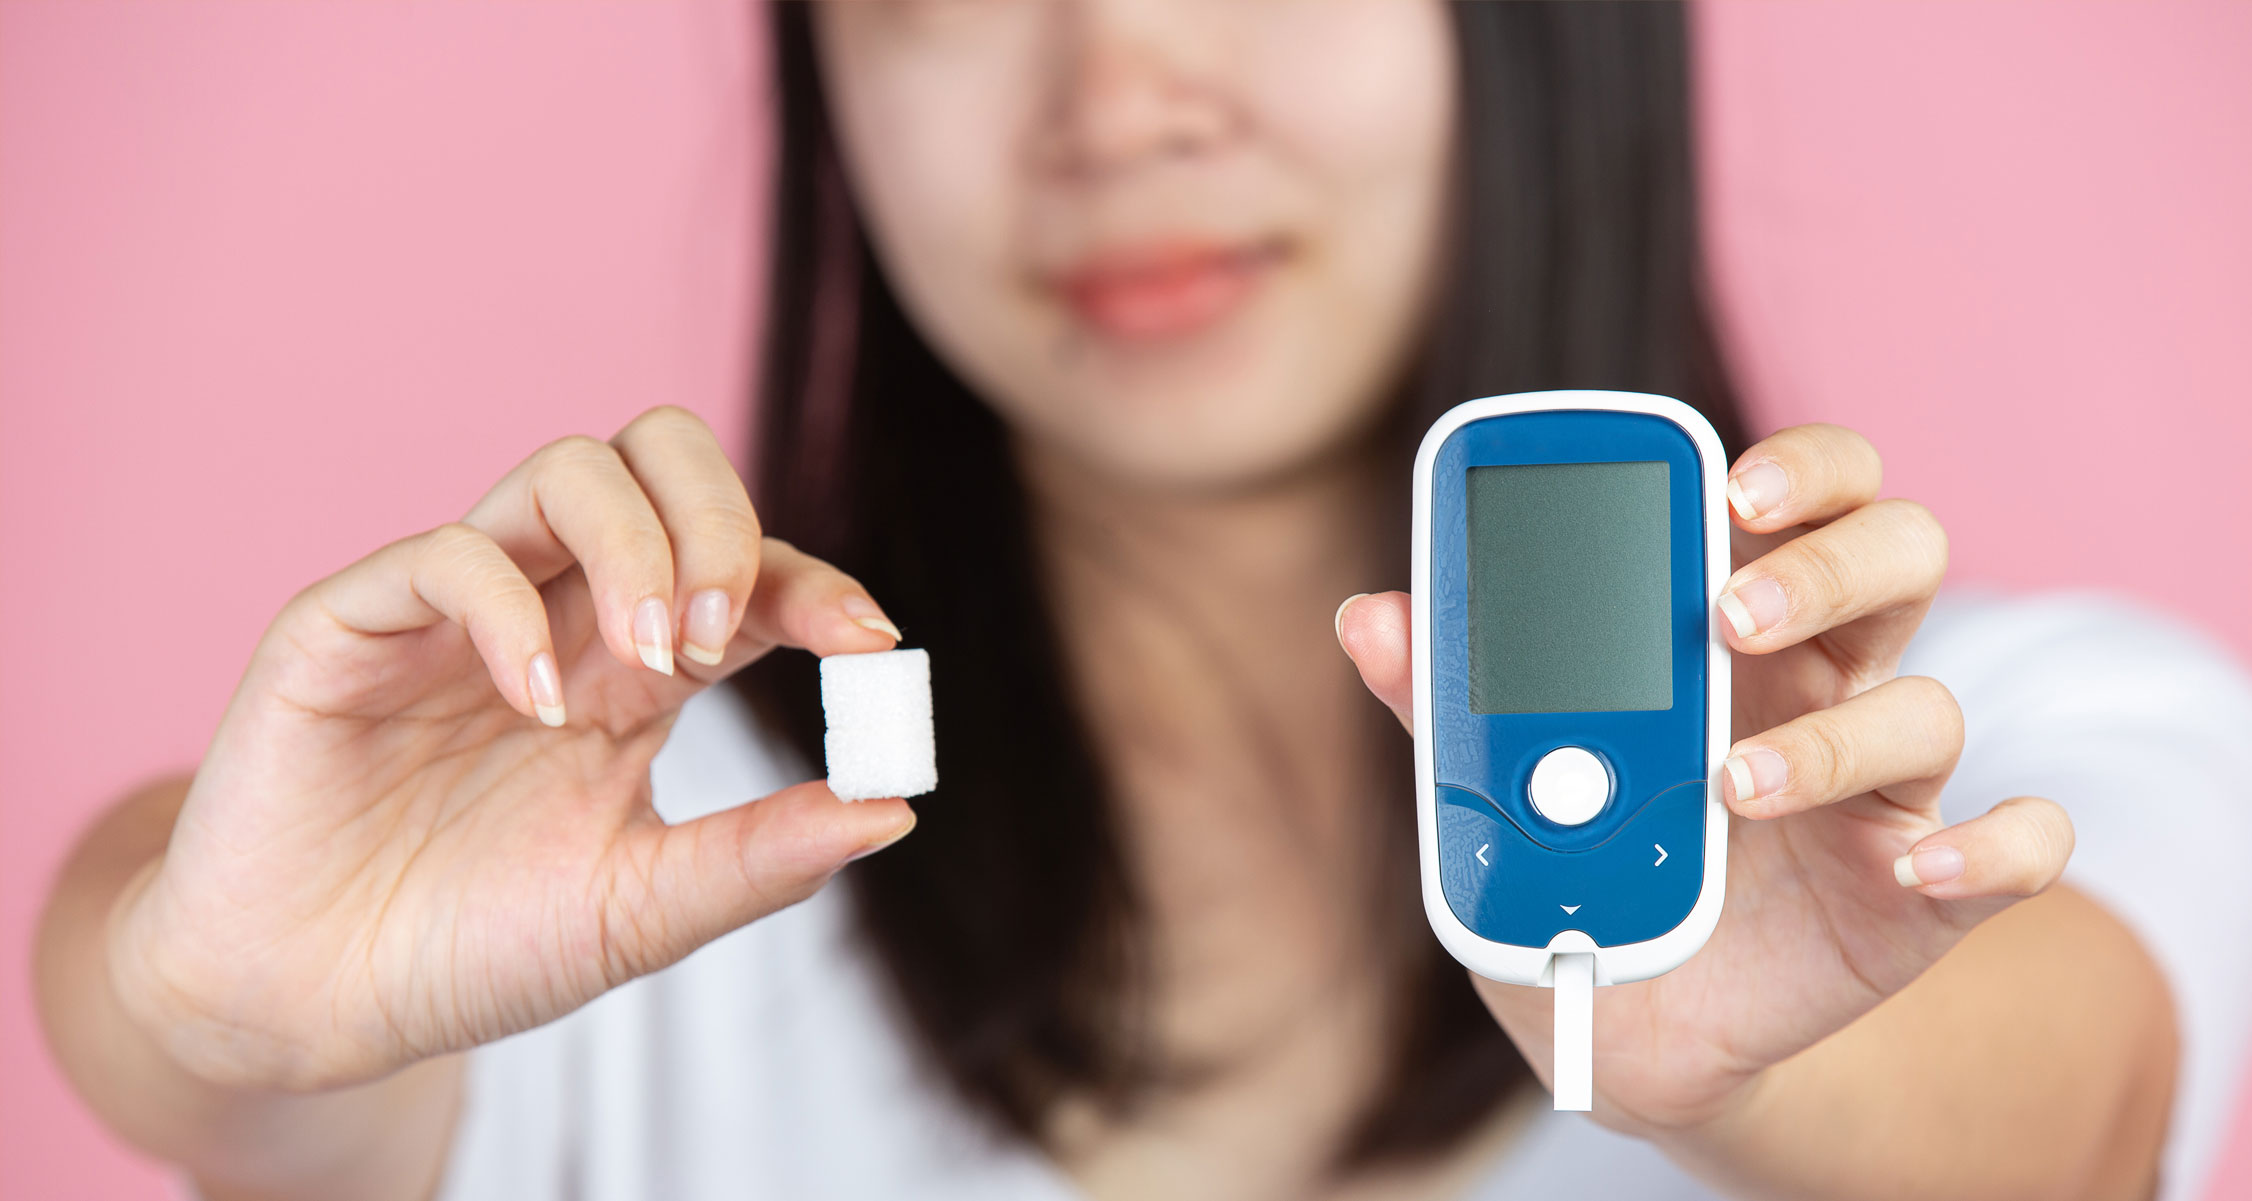 Diabetes Diagnosis device